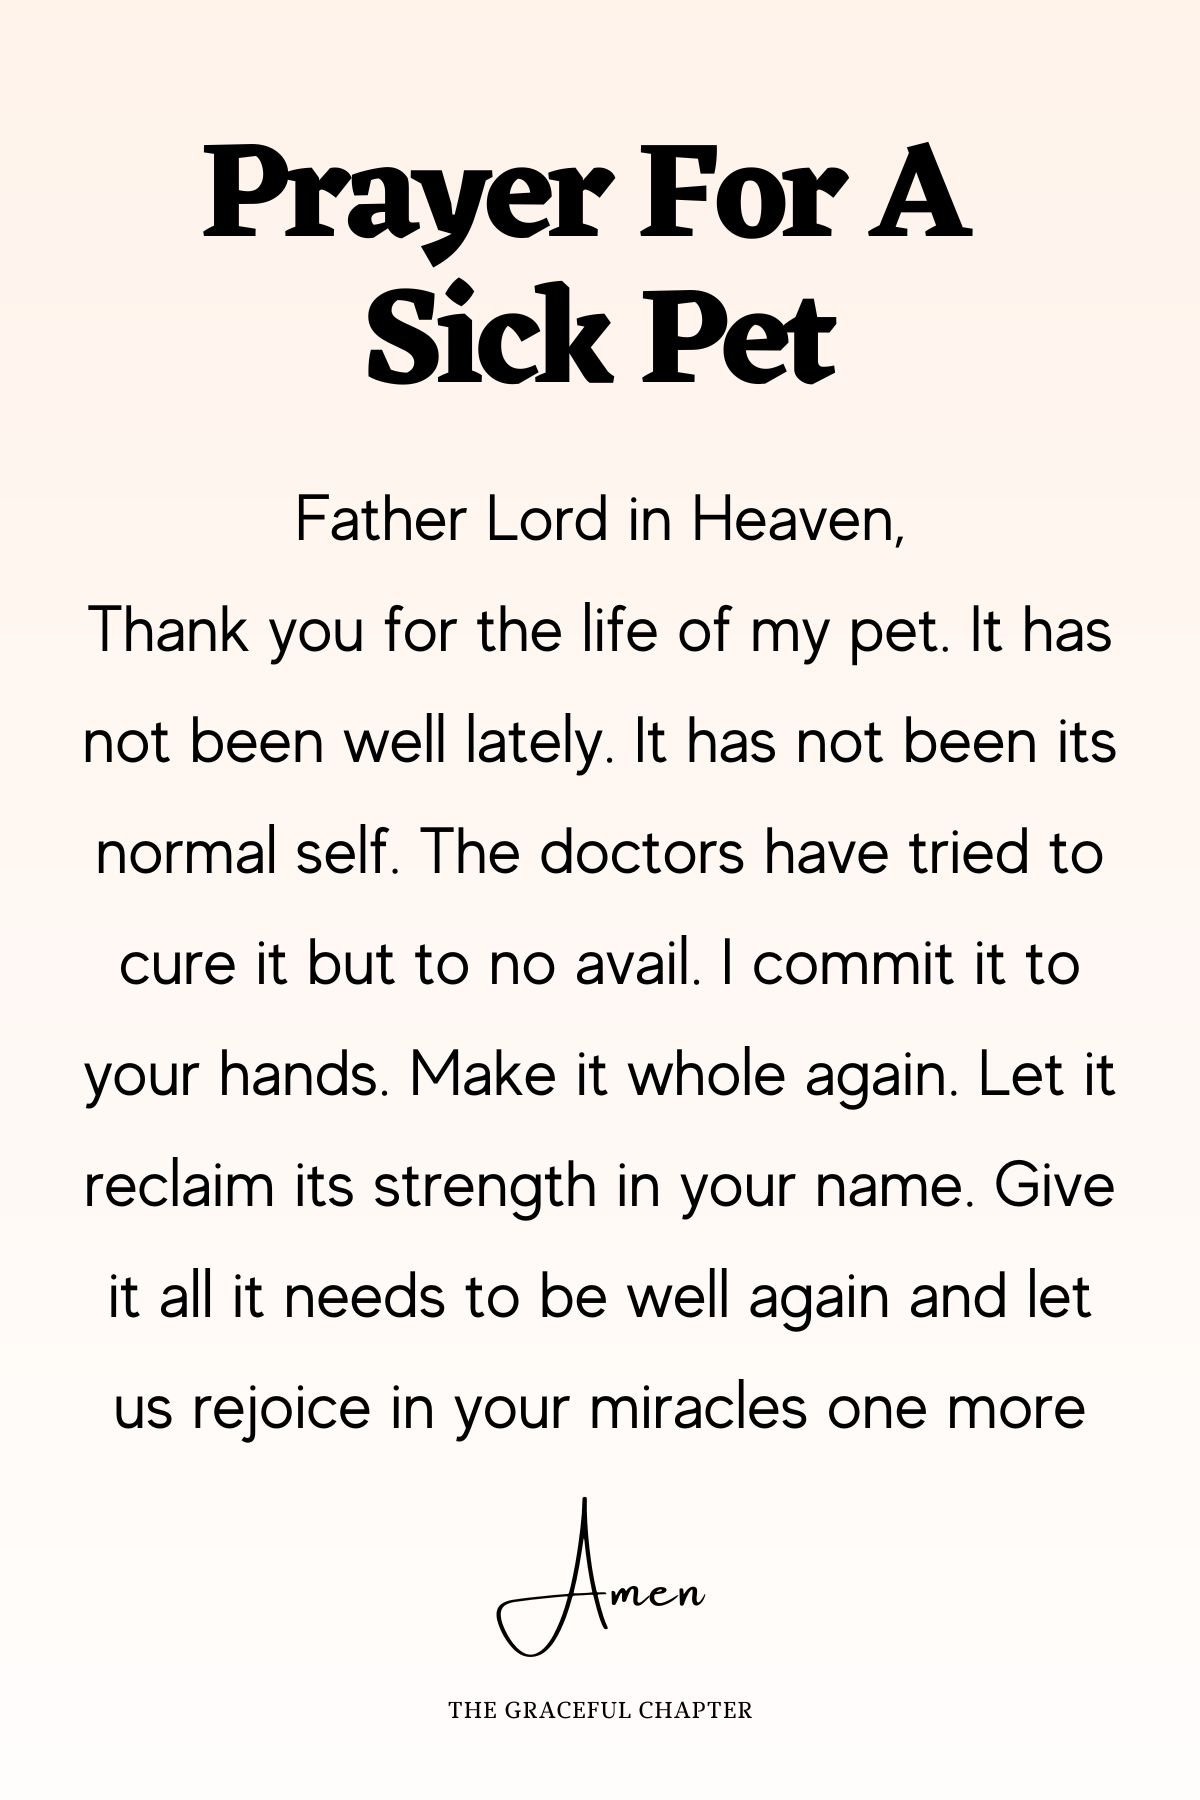 Prayer for a sick pet - prayers for pets